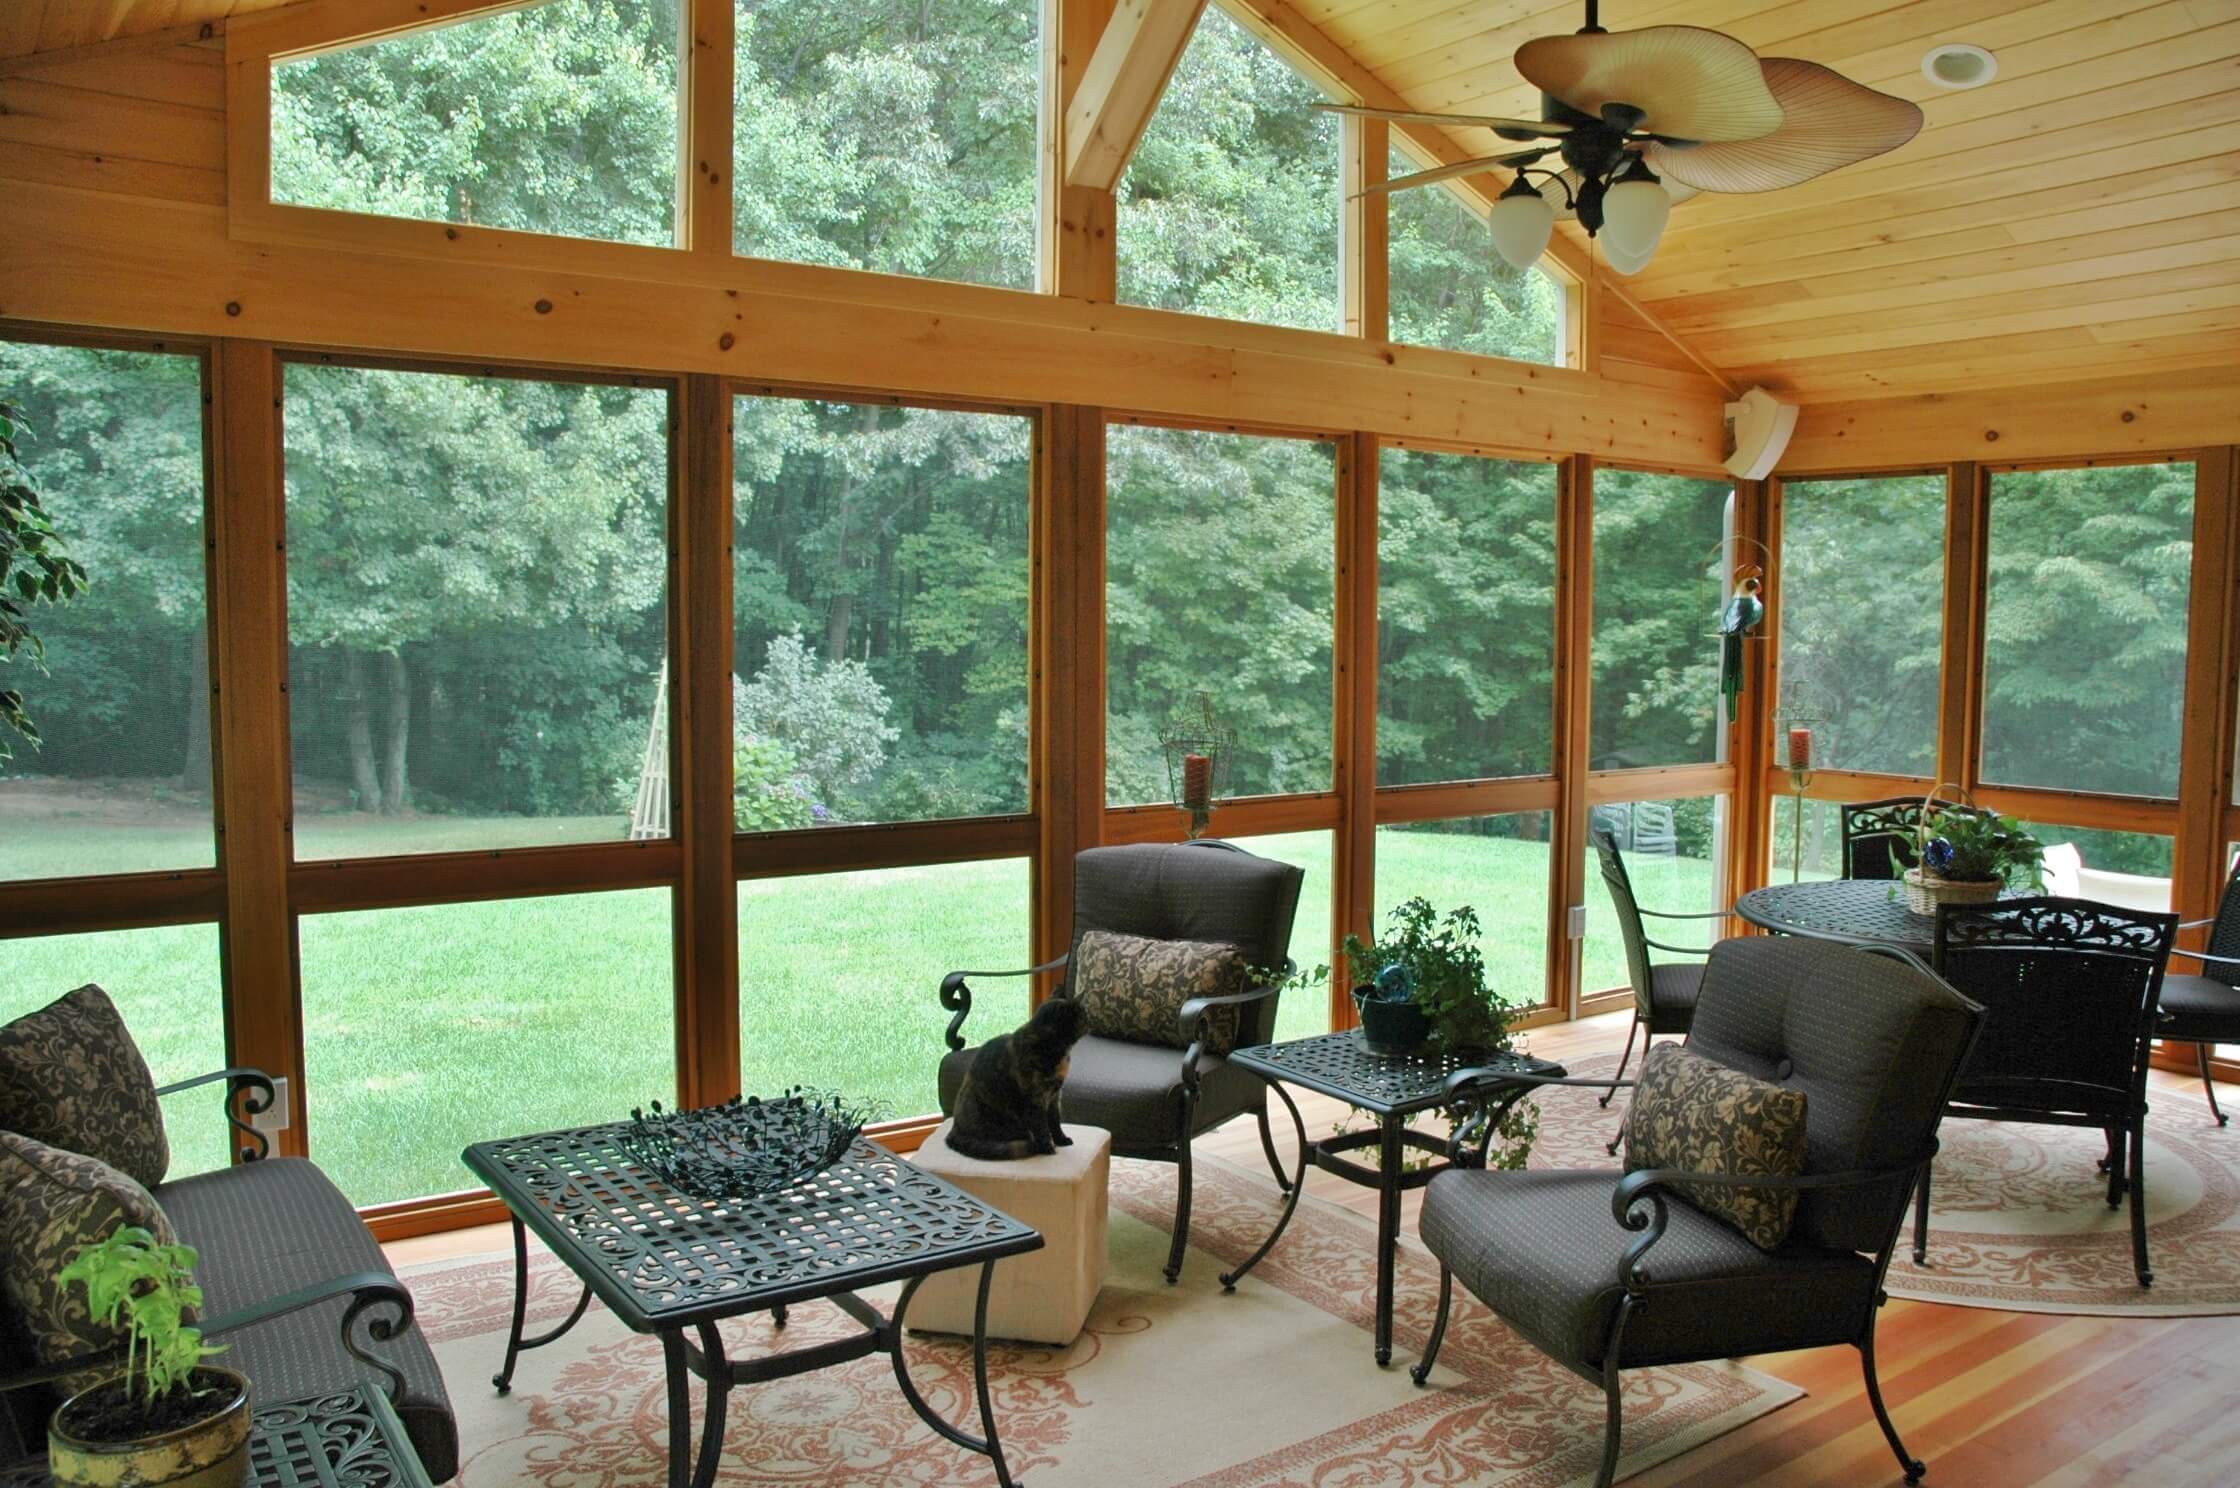 Cozy three season porch with backyard view